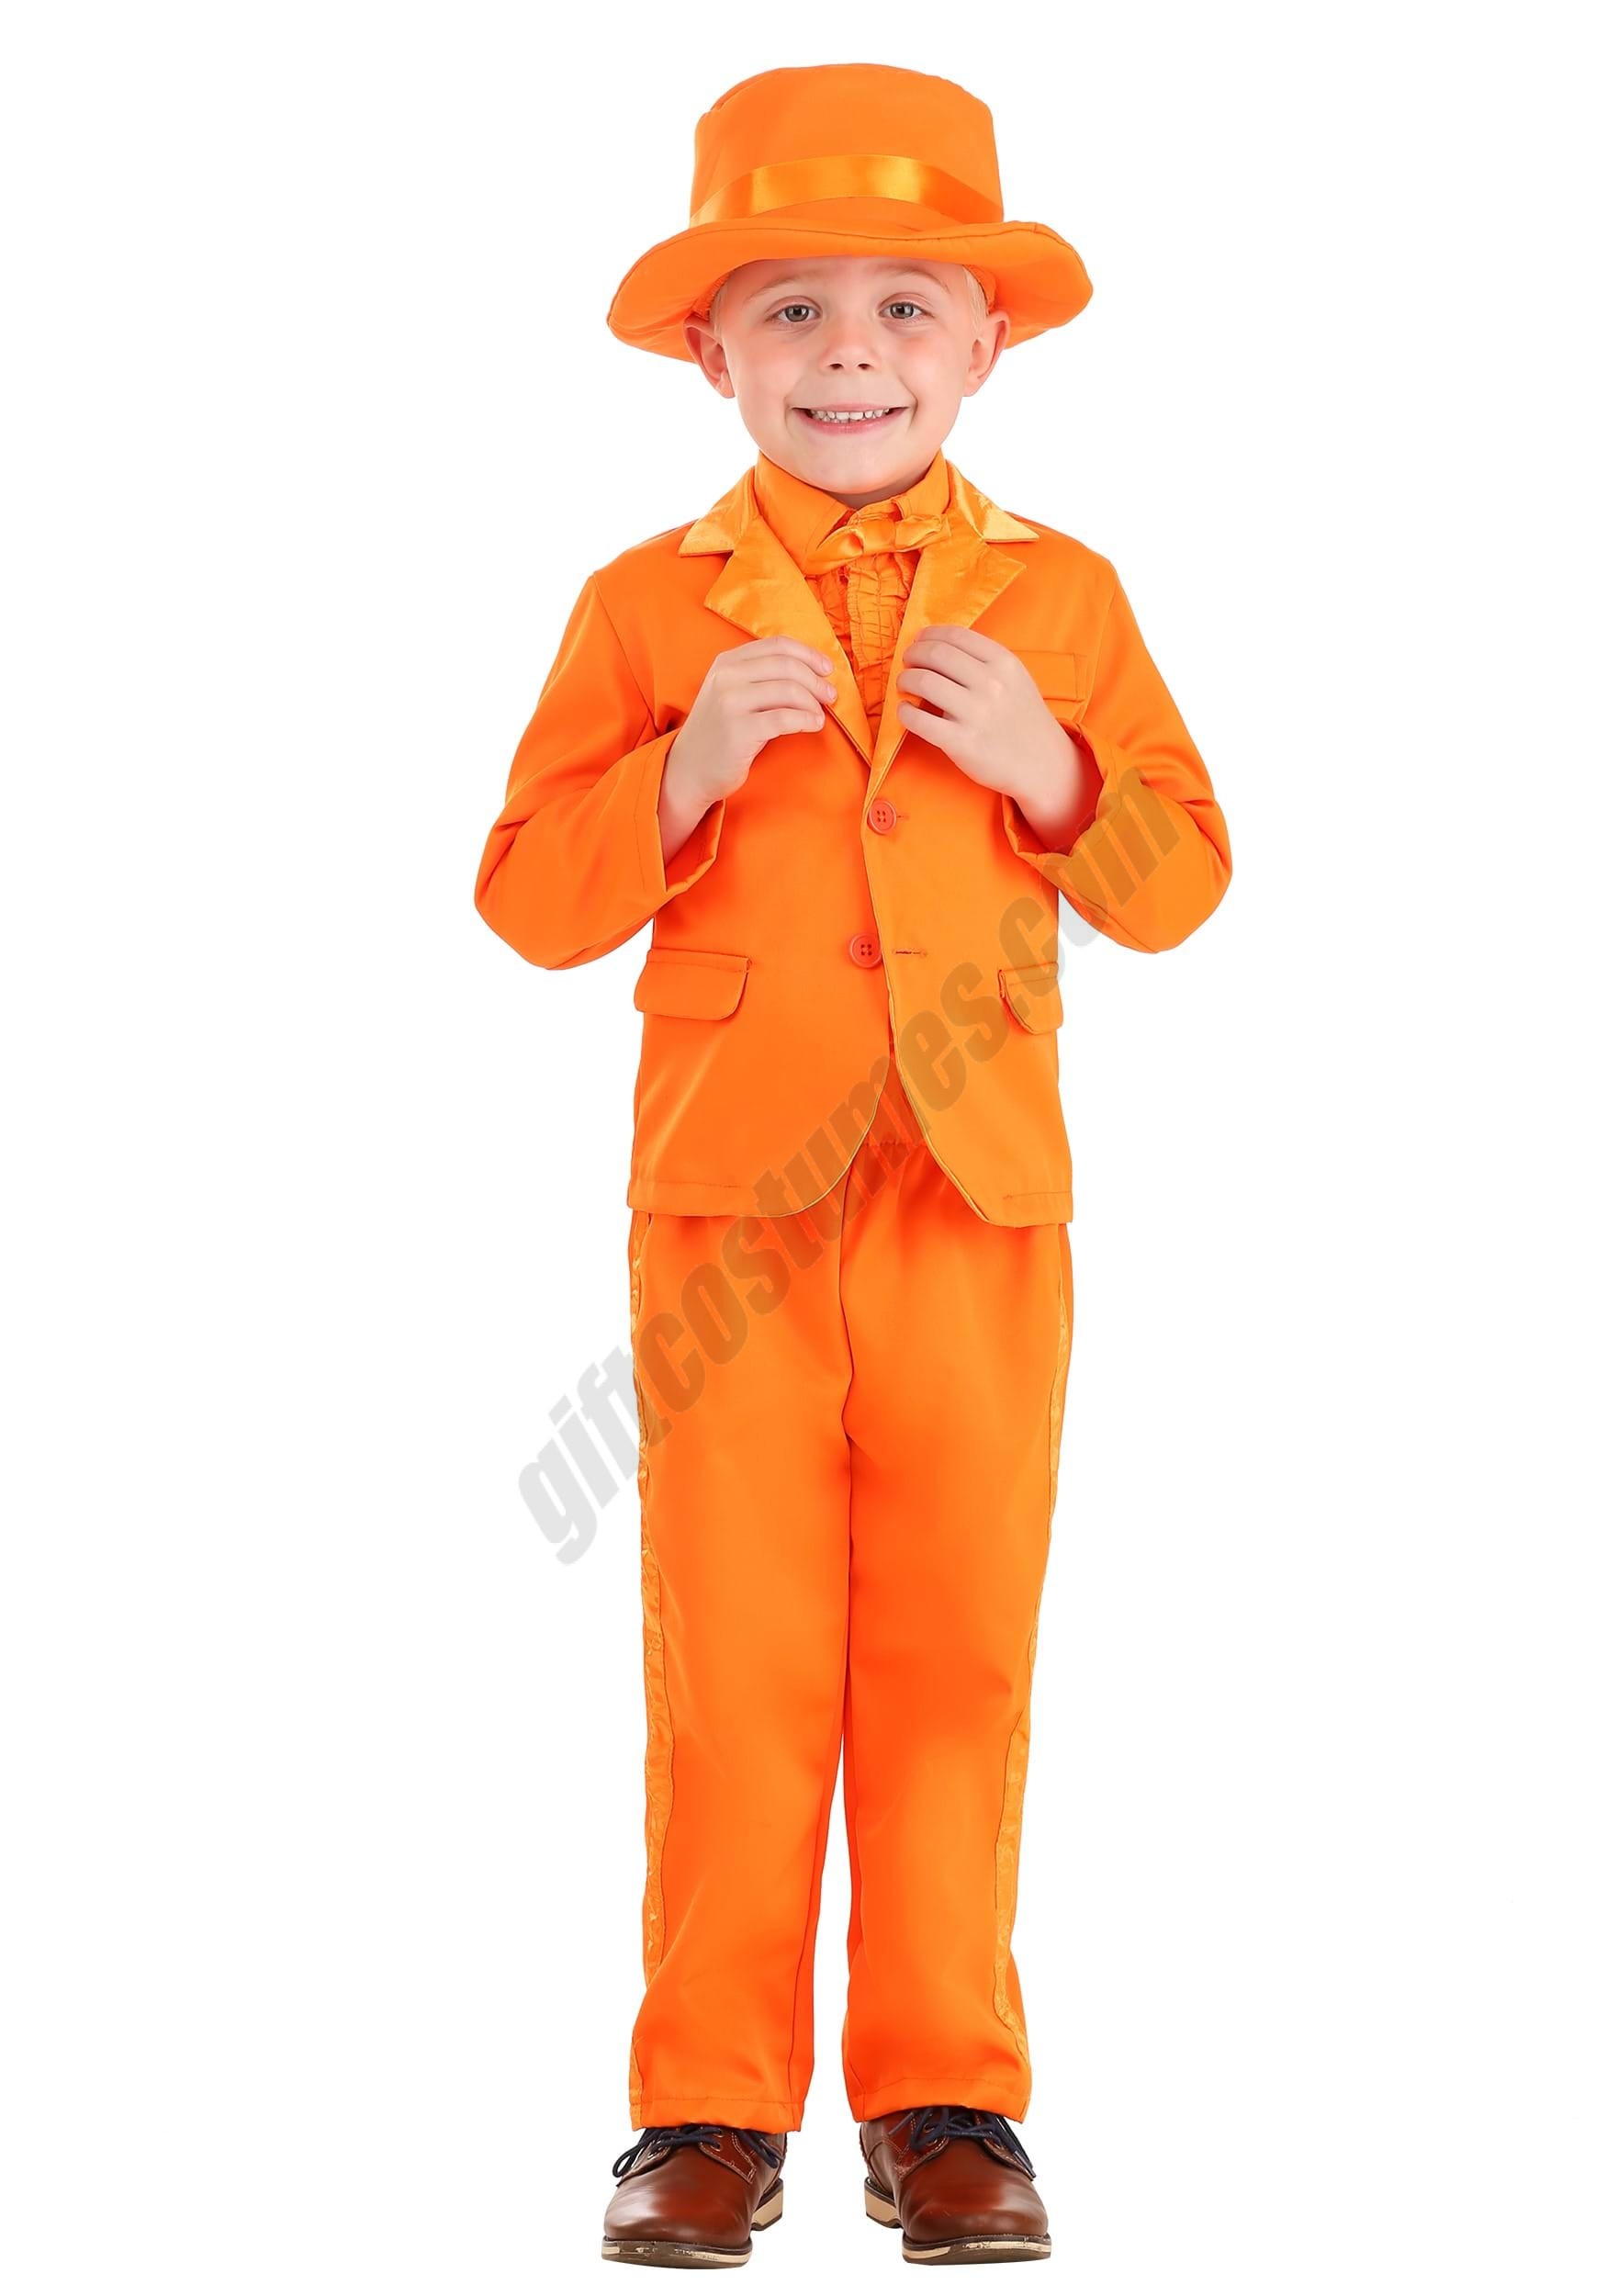 Toddler Orange Tuxedo Costume Promotions - Toddler Orange Tuxedo Costume Promotions